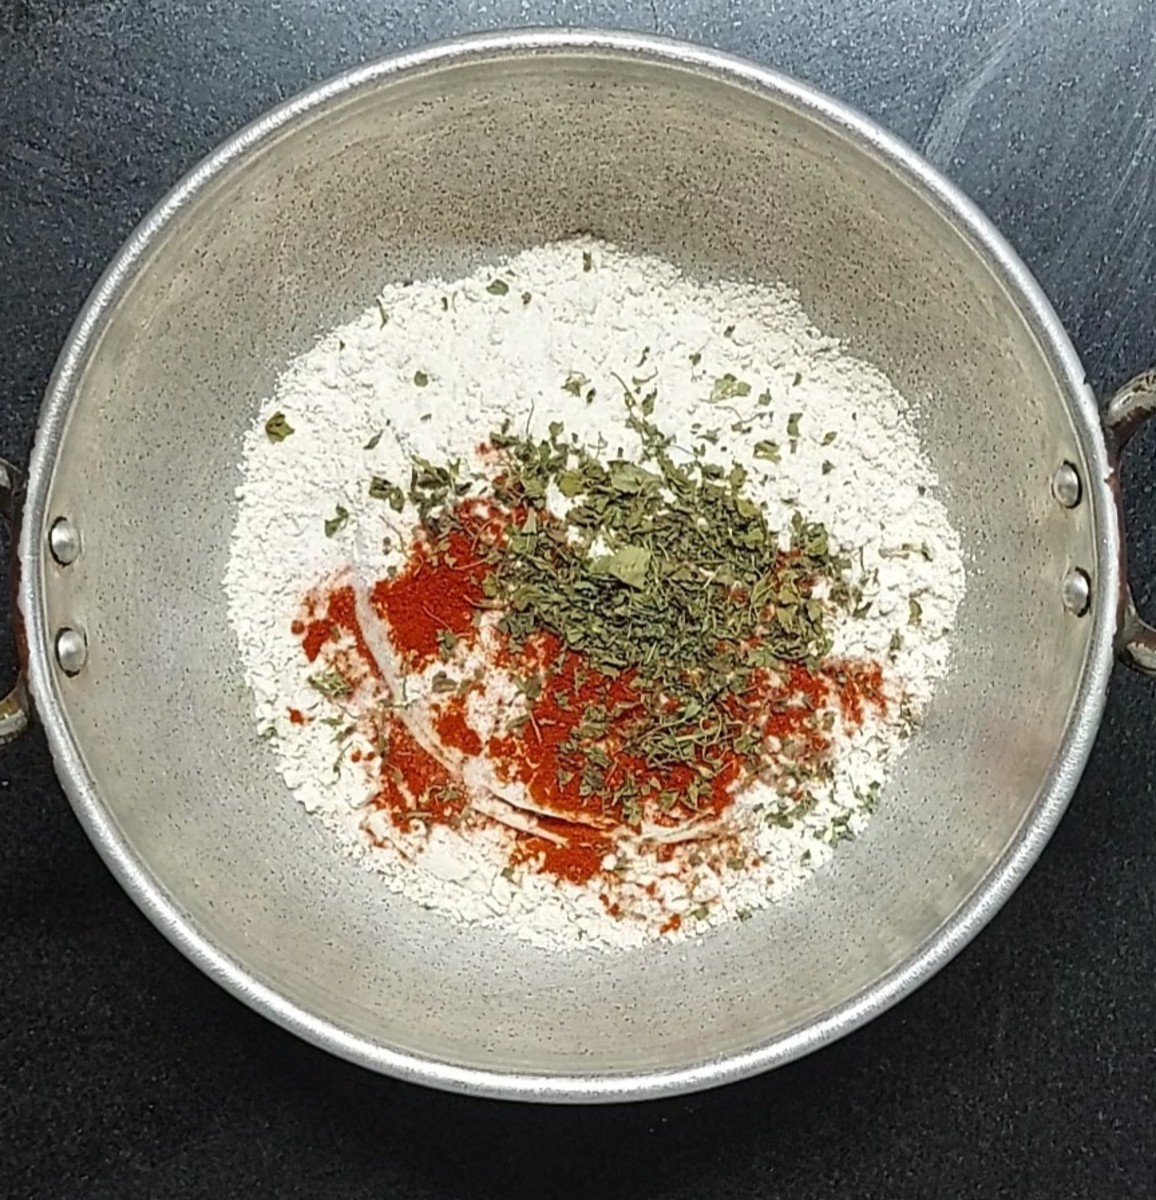 In a wide vessel, add 2 cups of whole wheat flour, salt to taste, 1 teaspoon red chili powder and 1 teaspoon crushed kasuri methi.